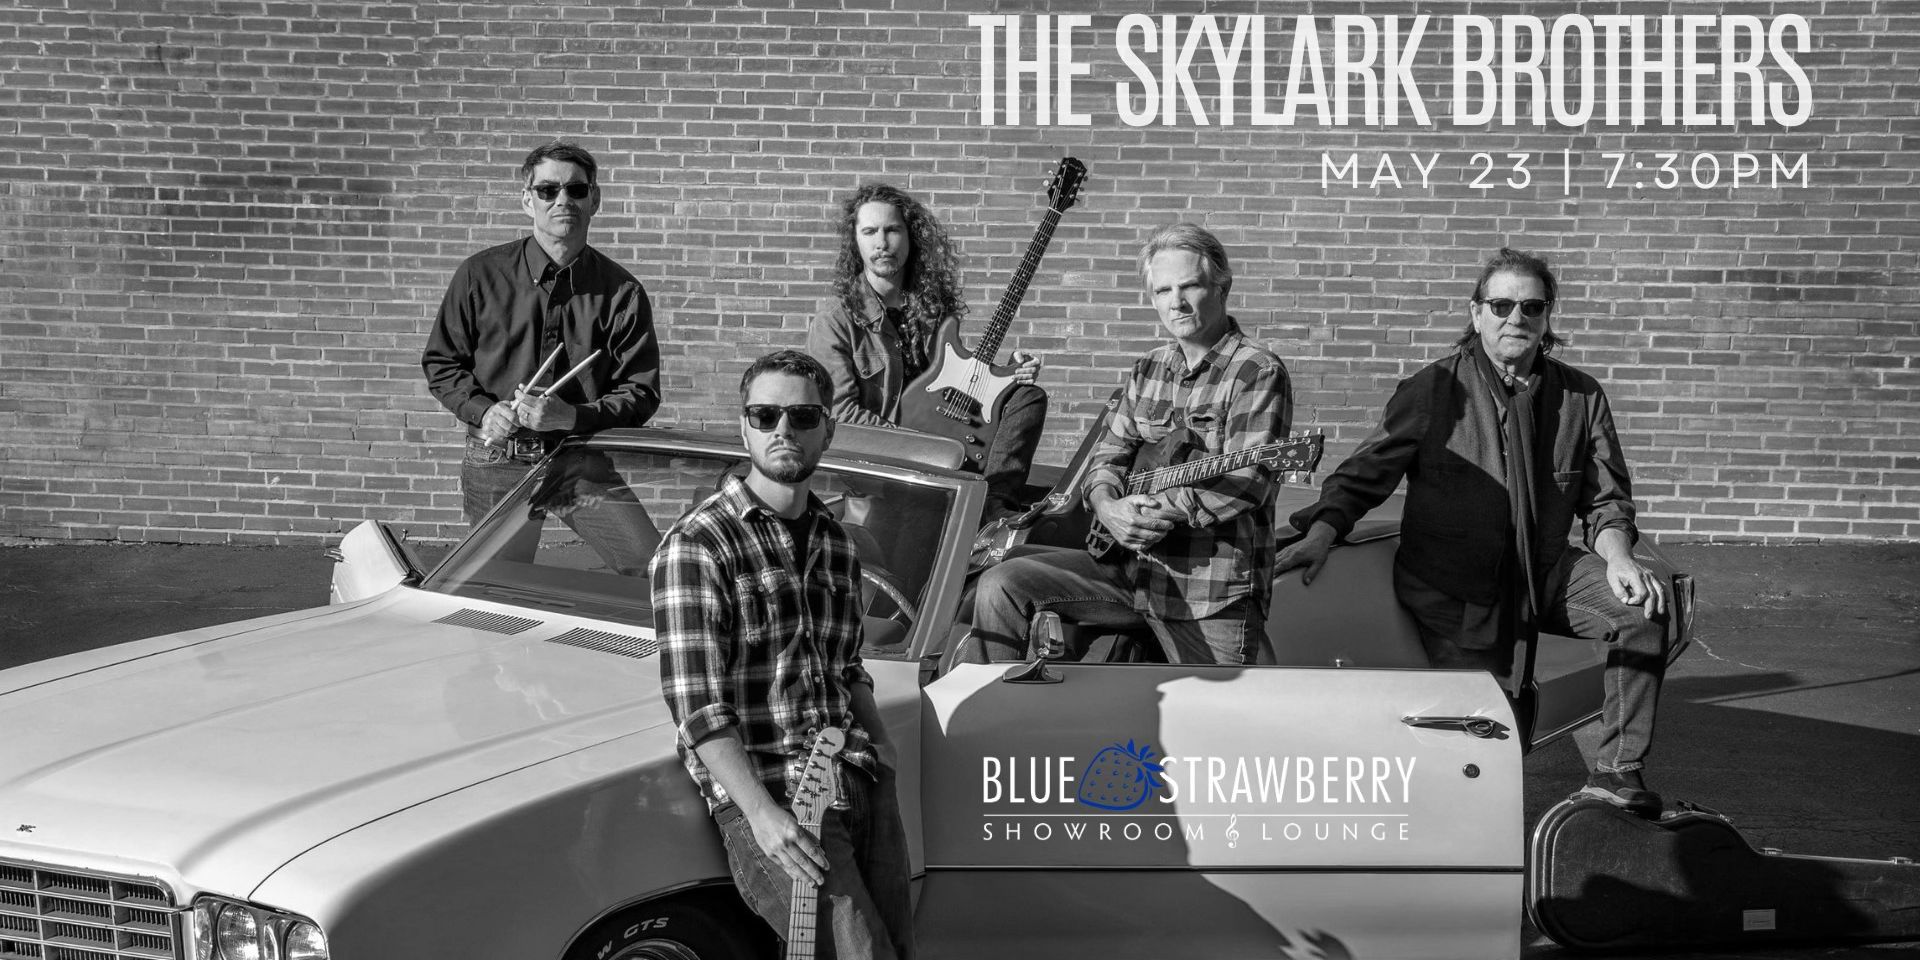 The Skylark Brothers promotional image